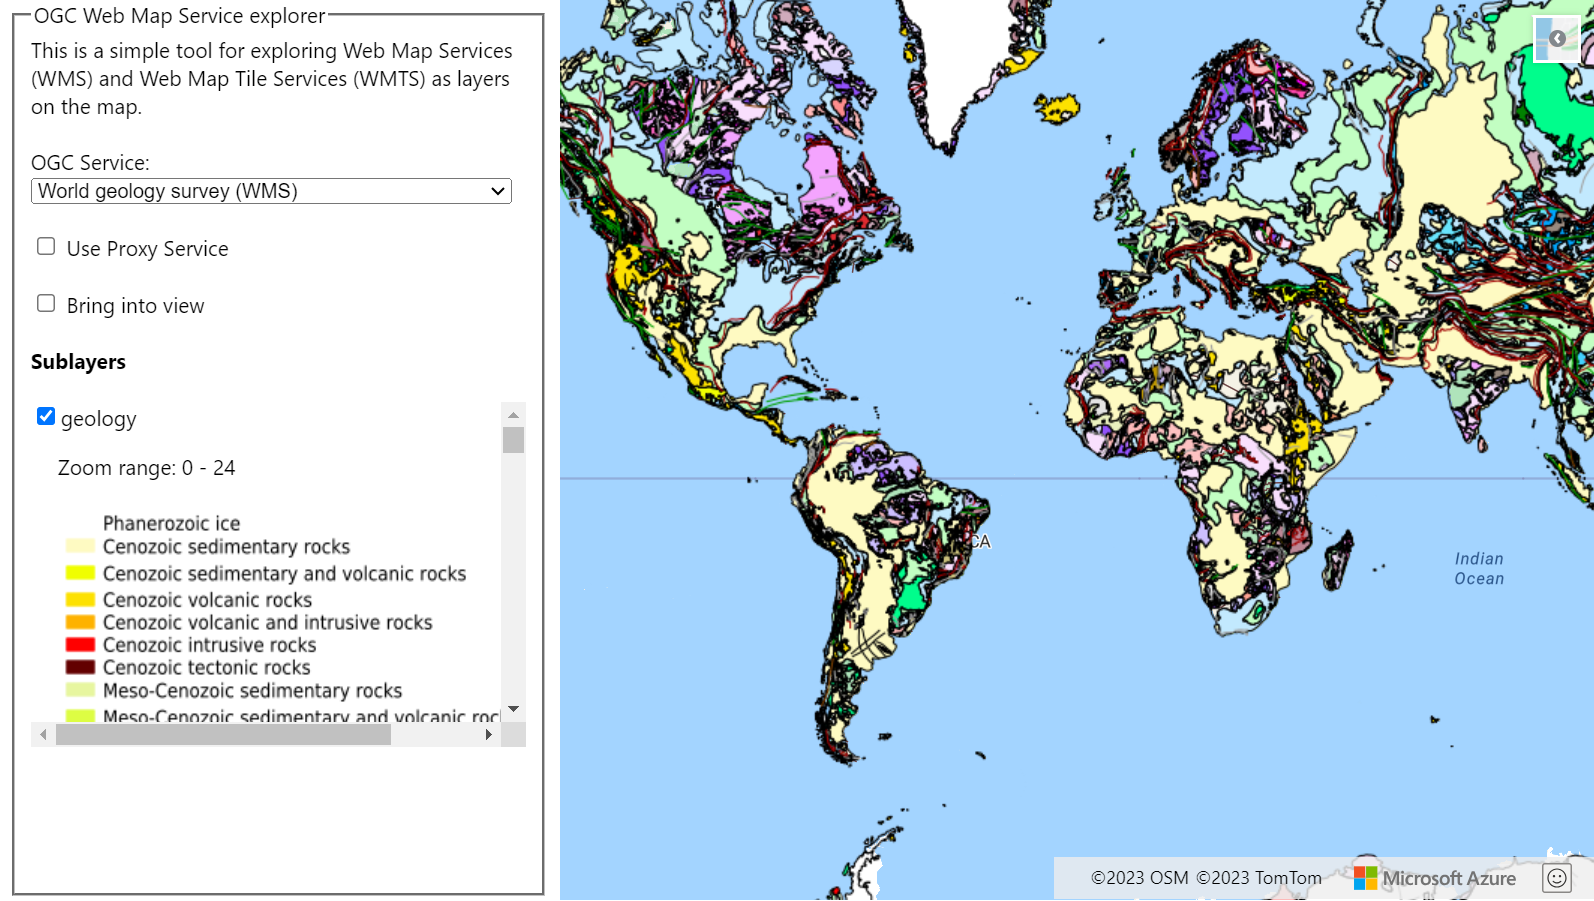 Cuplikan layar yang menunjukkan peta dengan lapisan WMTS yang berasal dari survei geologi dunia. Di sebelah kiri peta adalah daftar drop-down yang menunjukkan layanan OGC yang dapat dipilih.